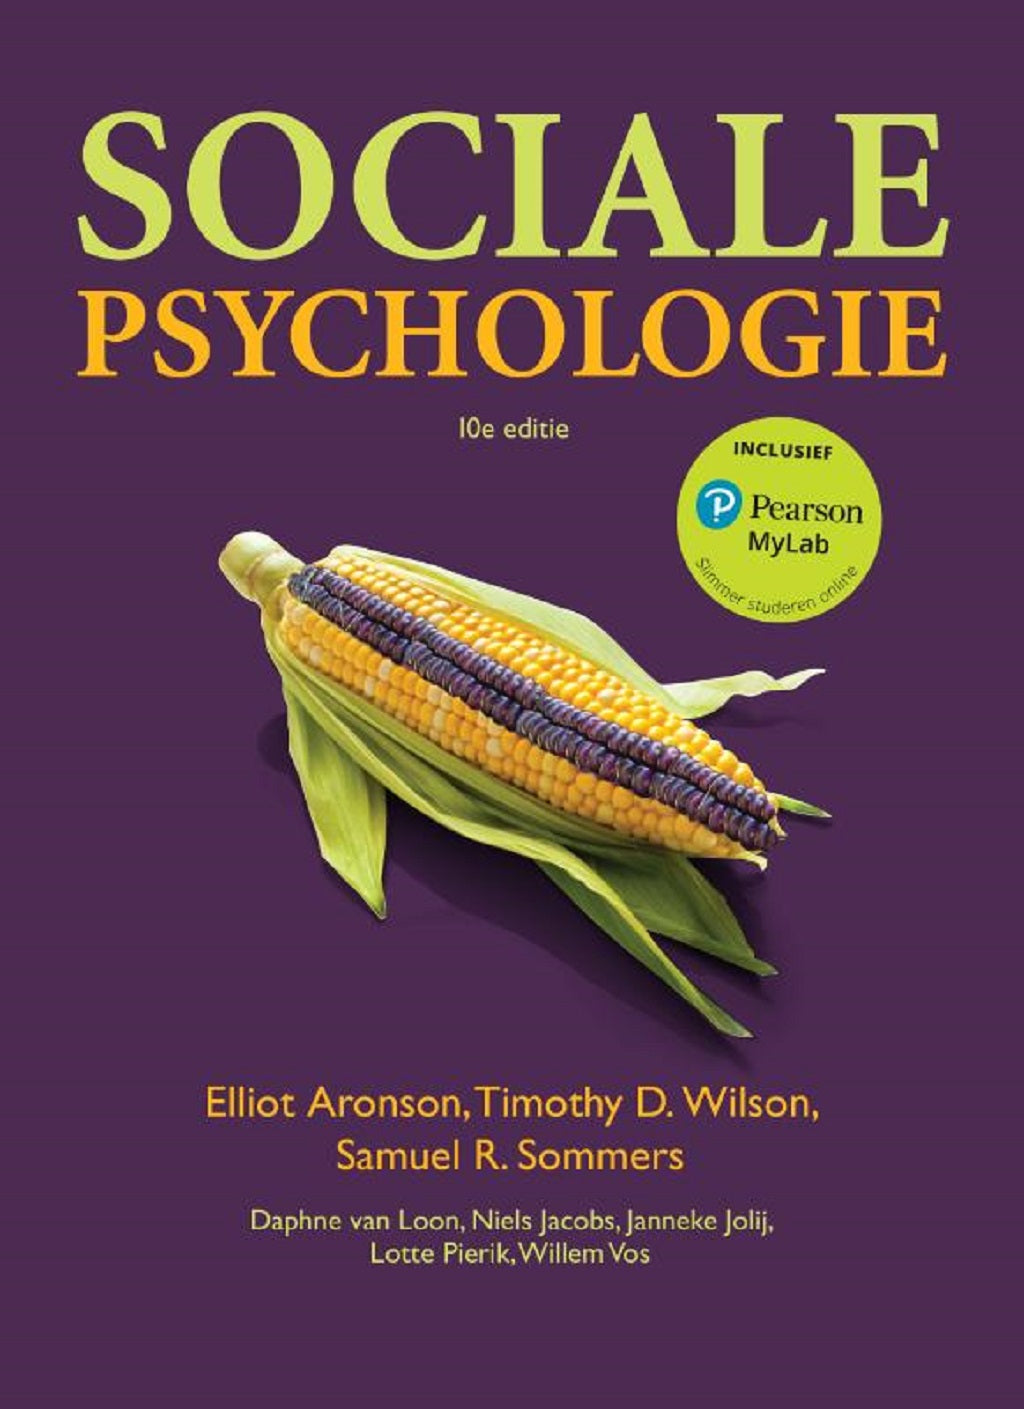 Sociale psychologie, 10e editie (Print boek + MyLab toegangscode)